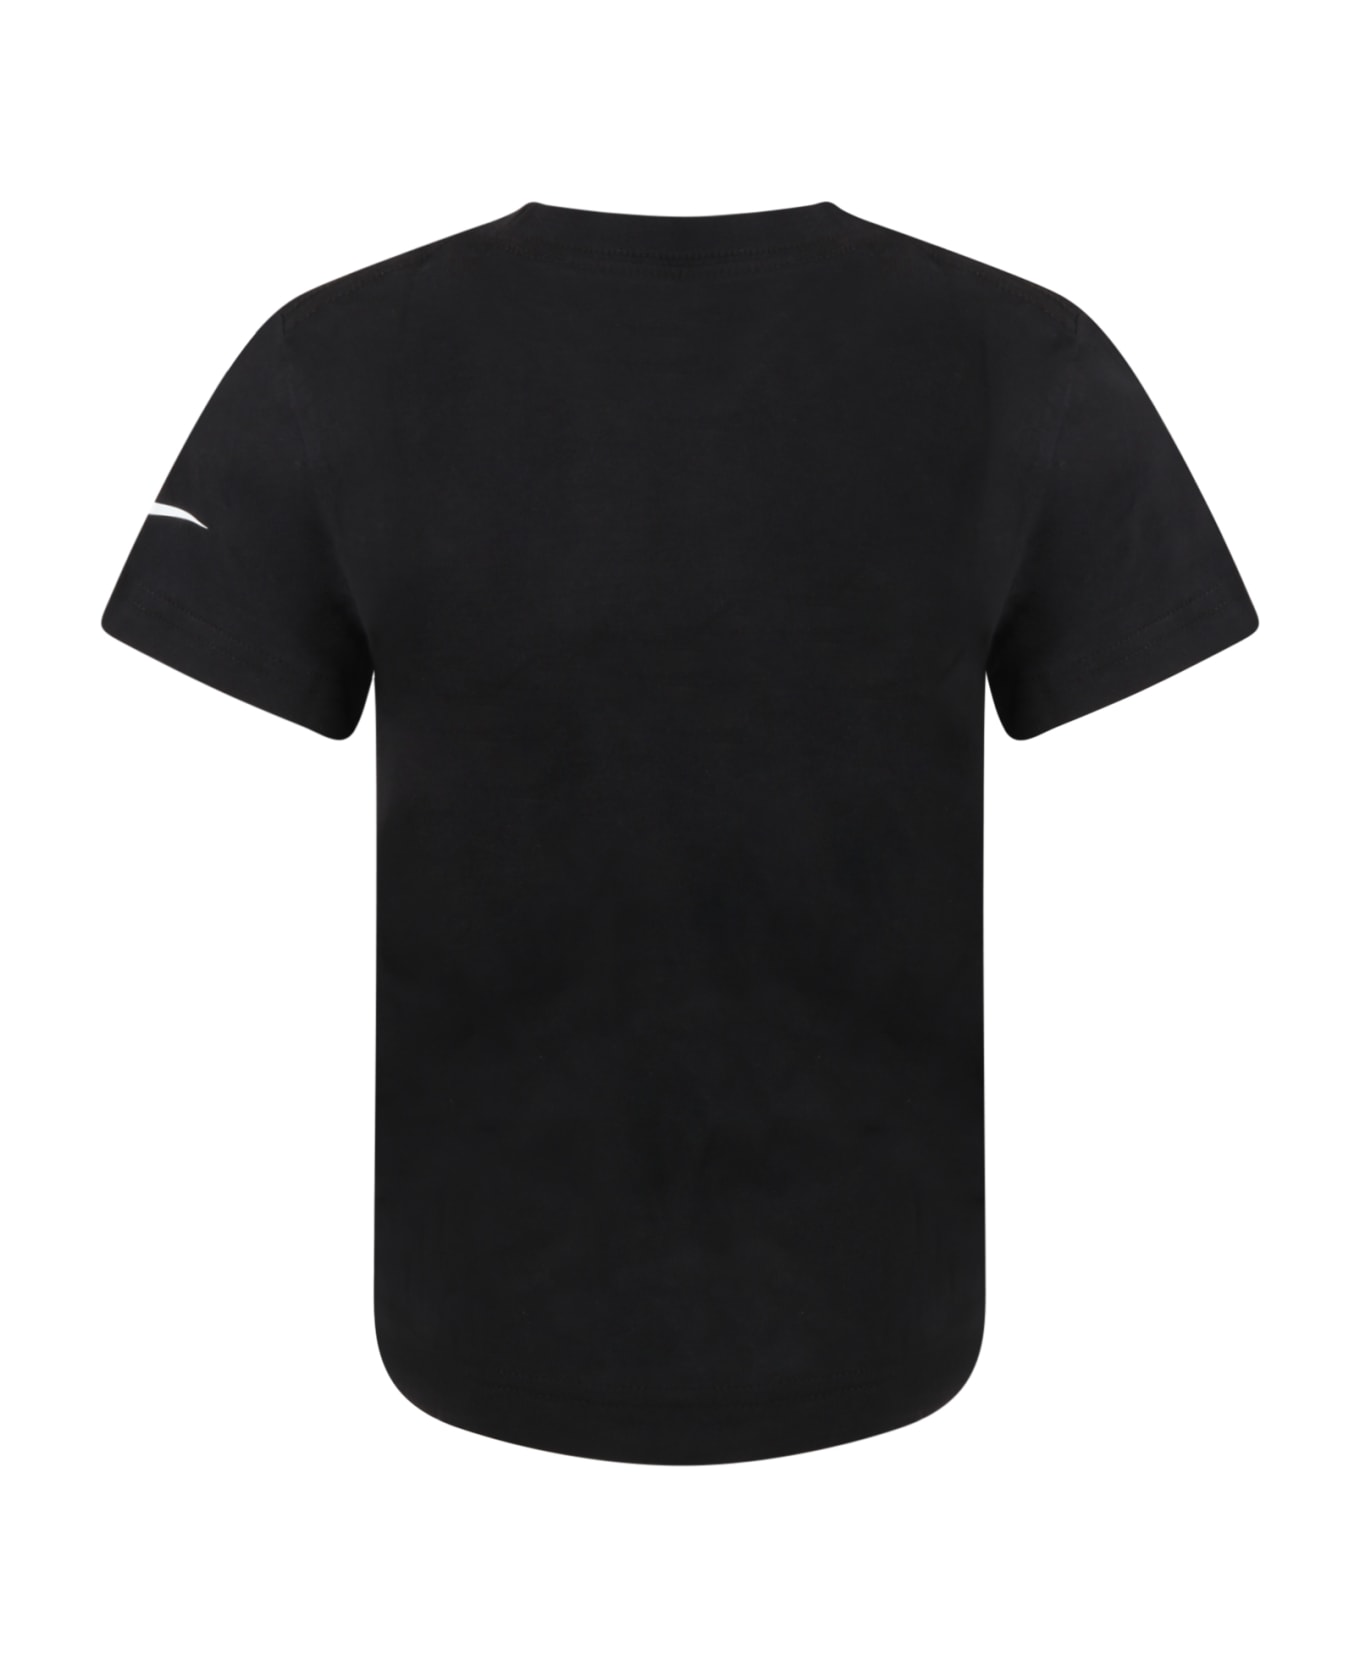 Nike Black T-shirt For Kids With Swoosh - Black